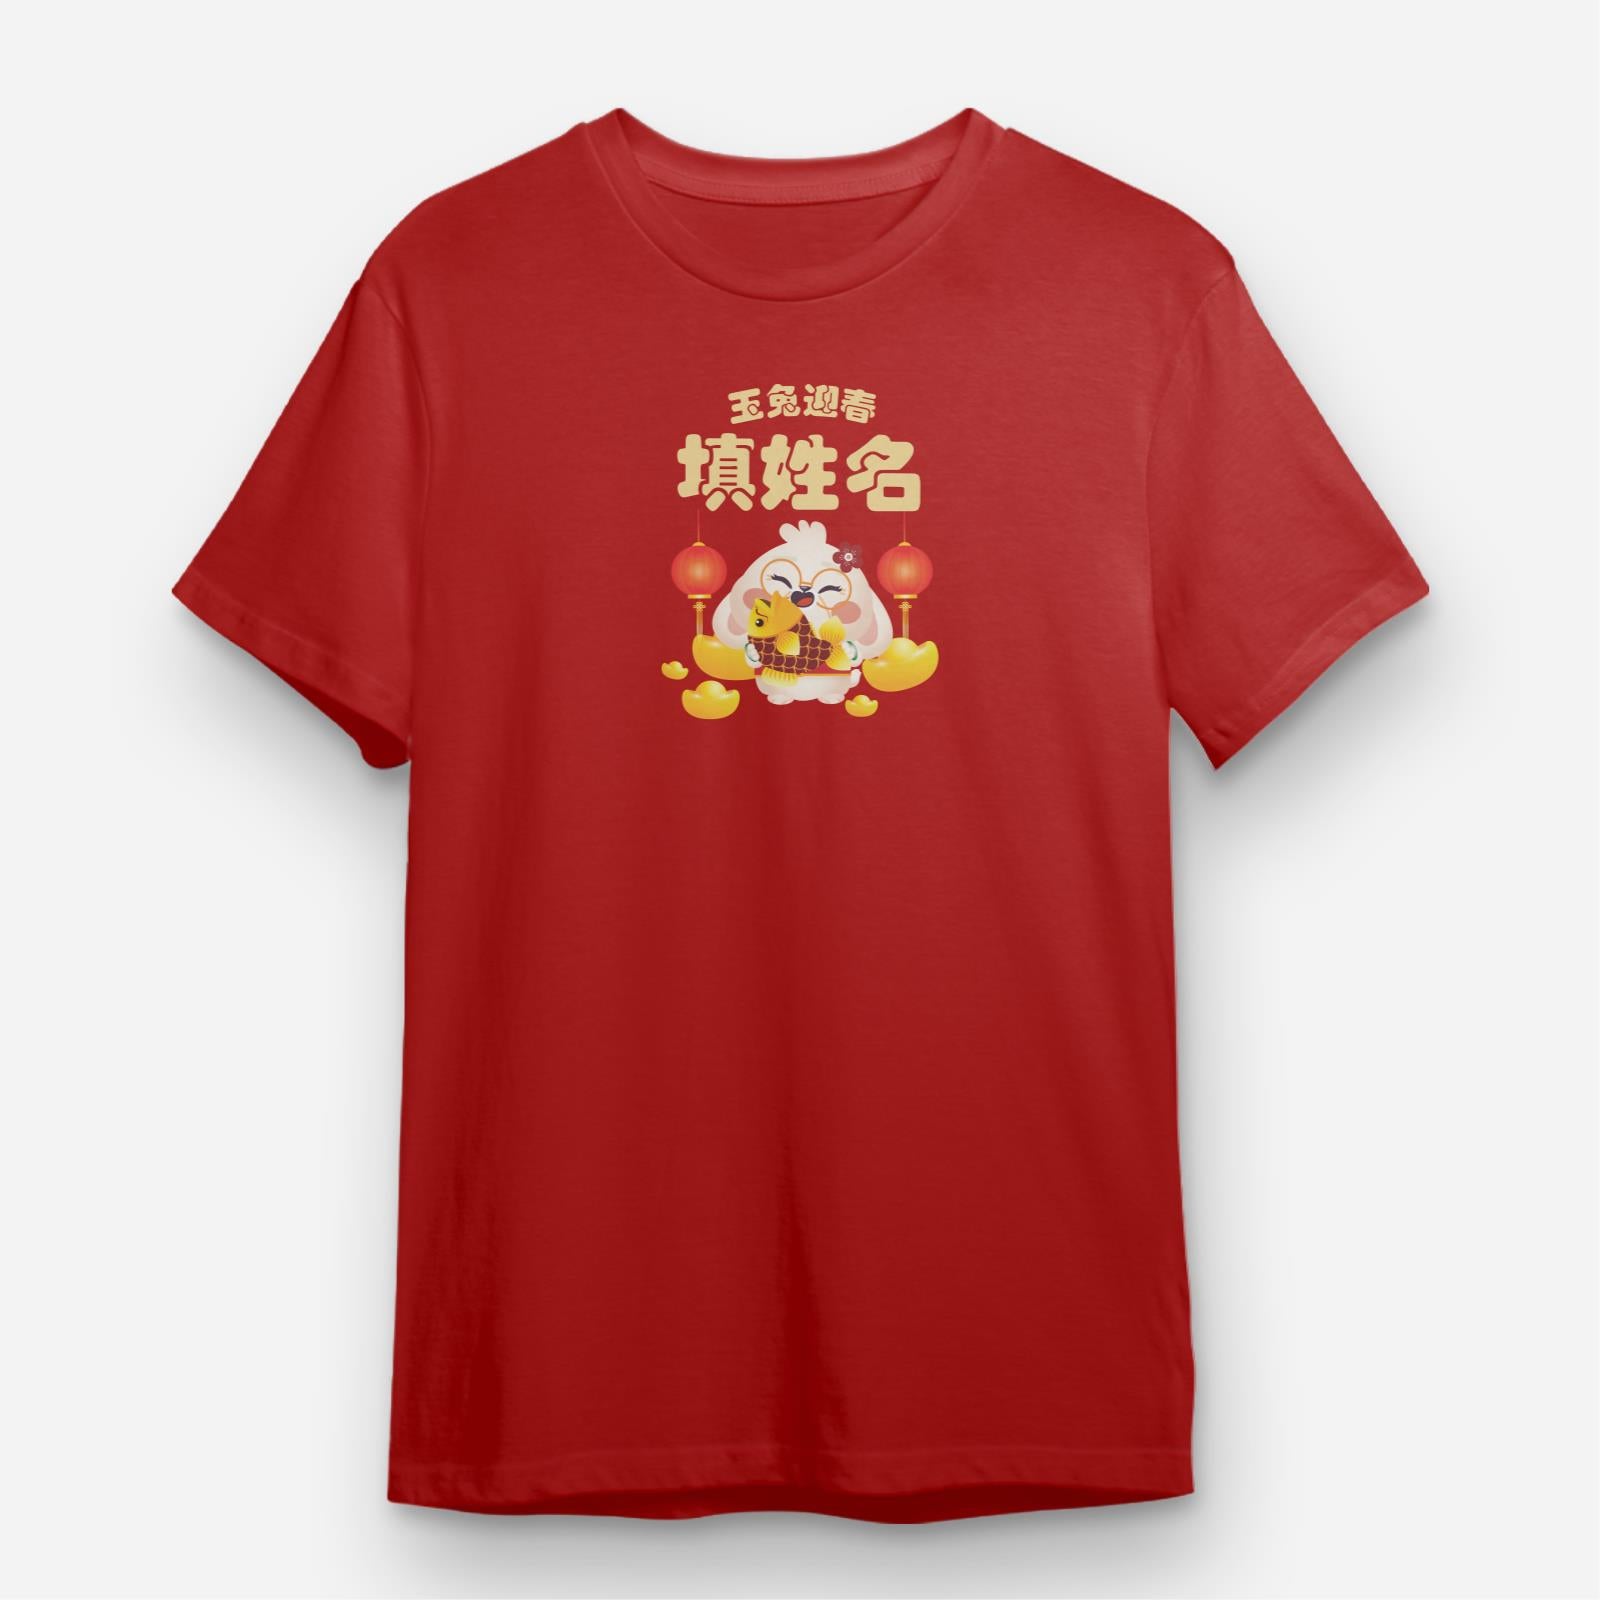 Cny Rabbit Family - Grandma Rabbit Unisex Tee Shirt with Chinese Personalization